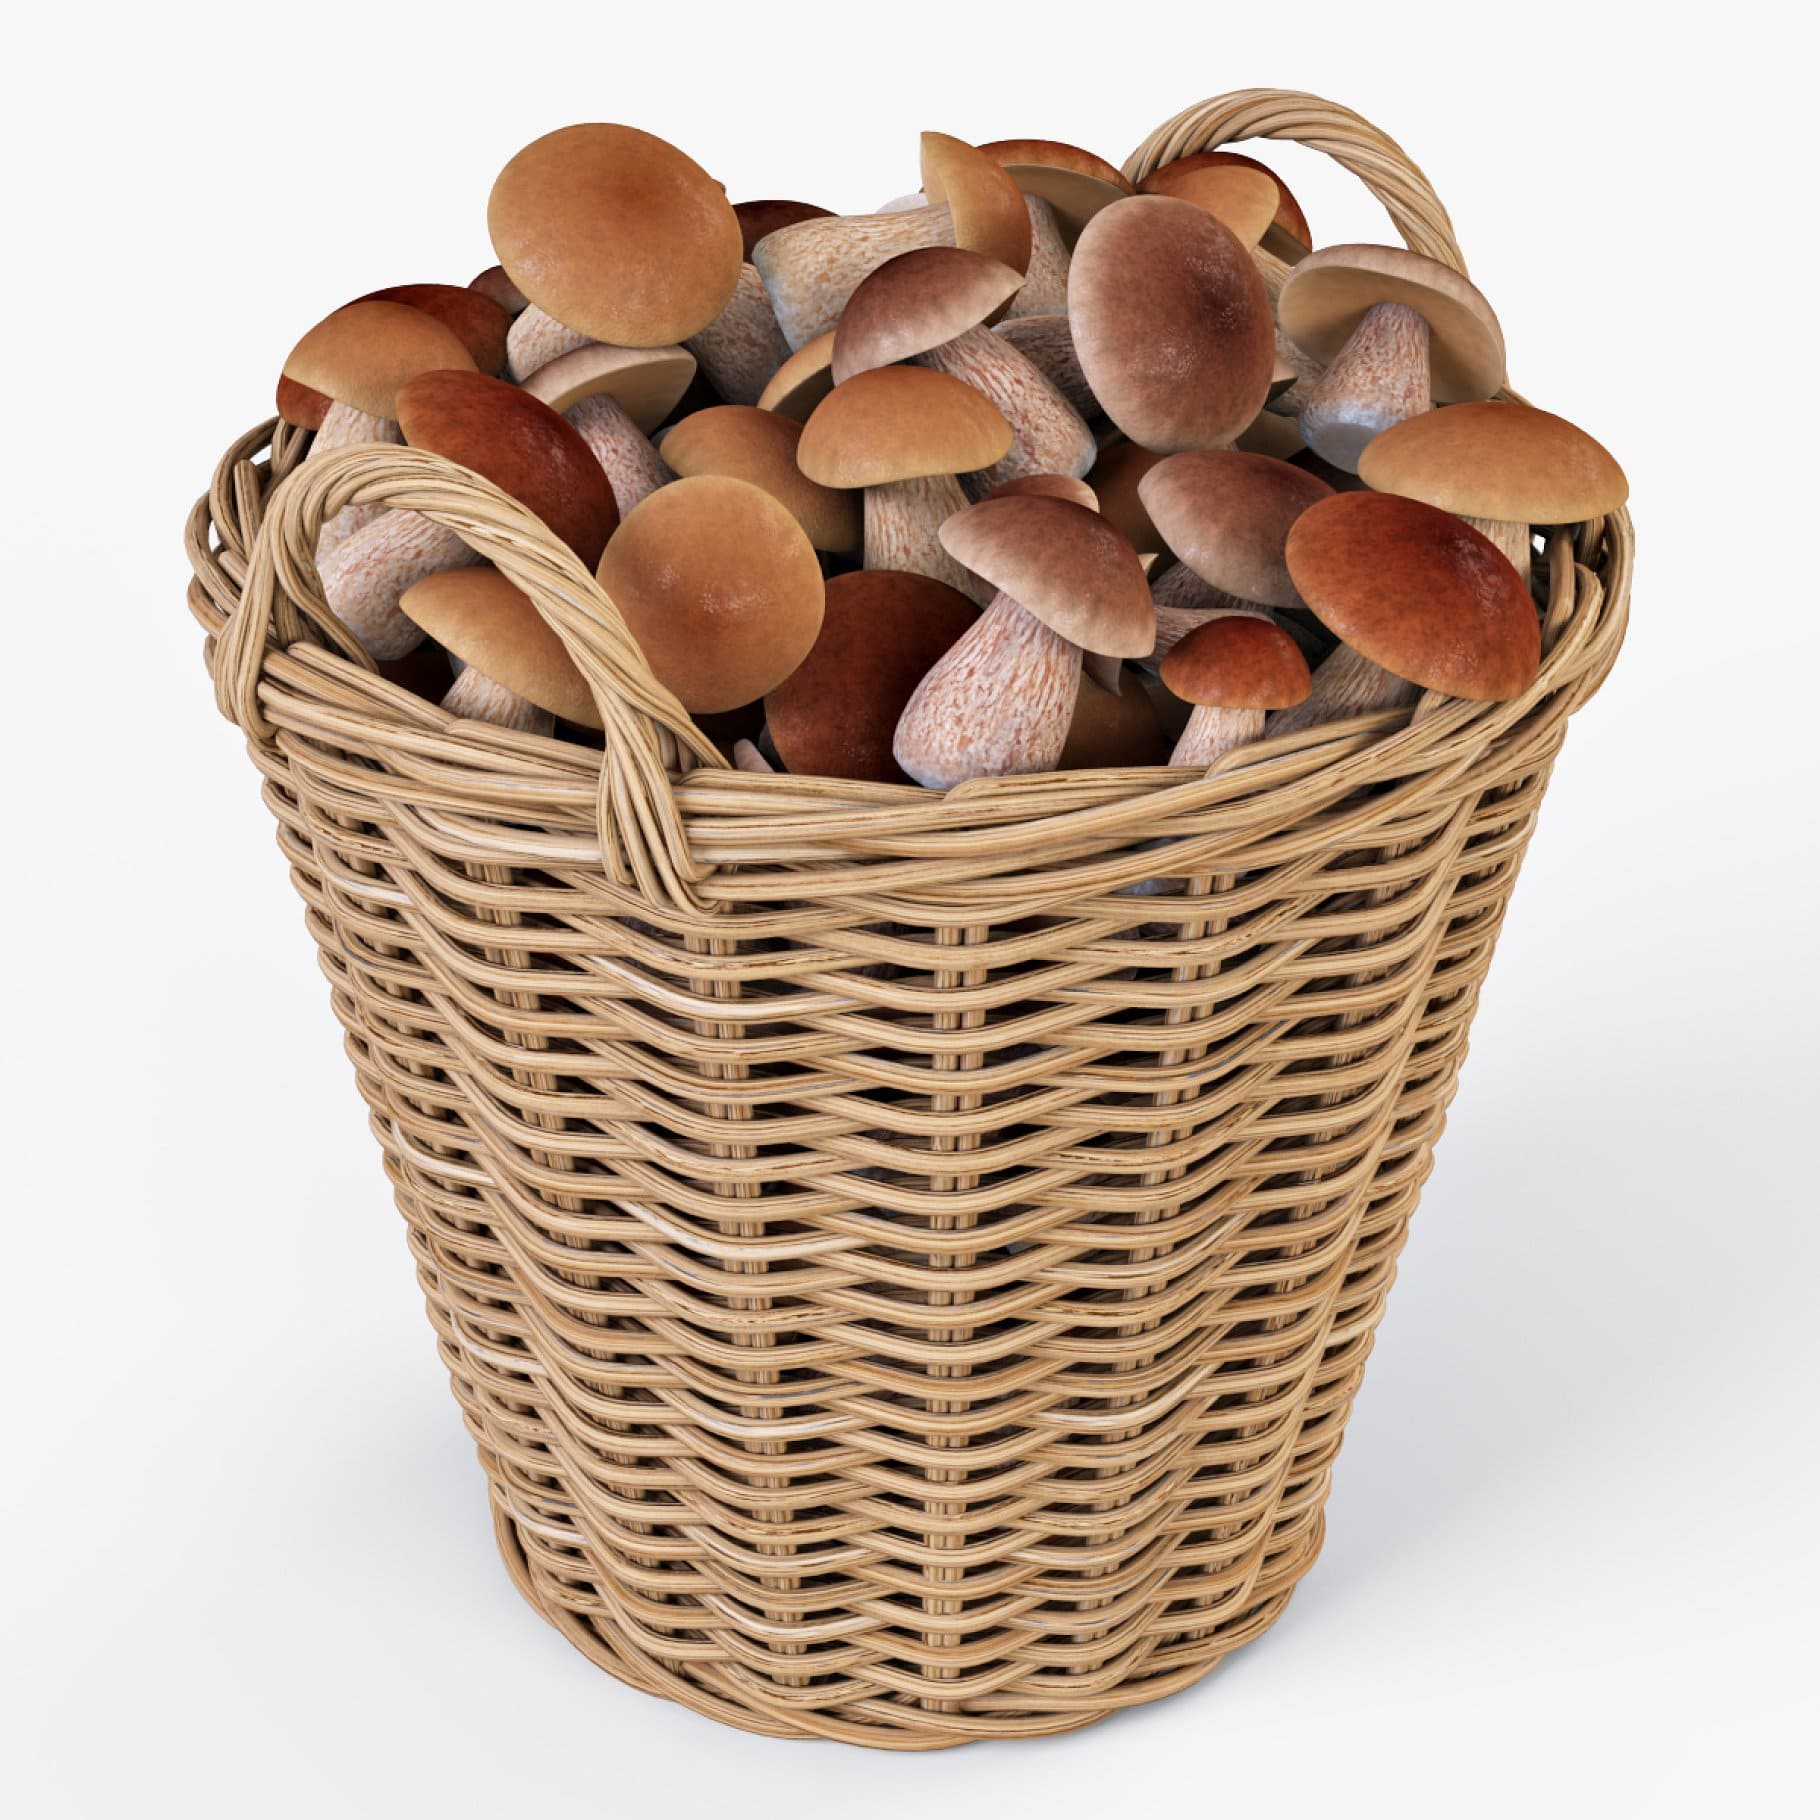 3D model basket with mushrooms close up.